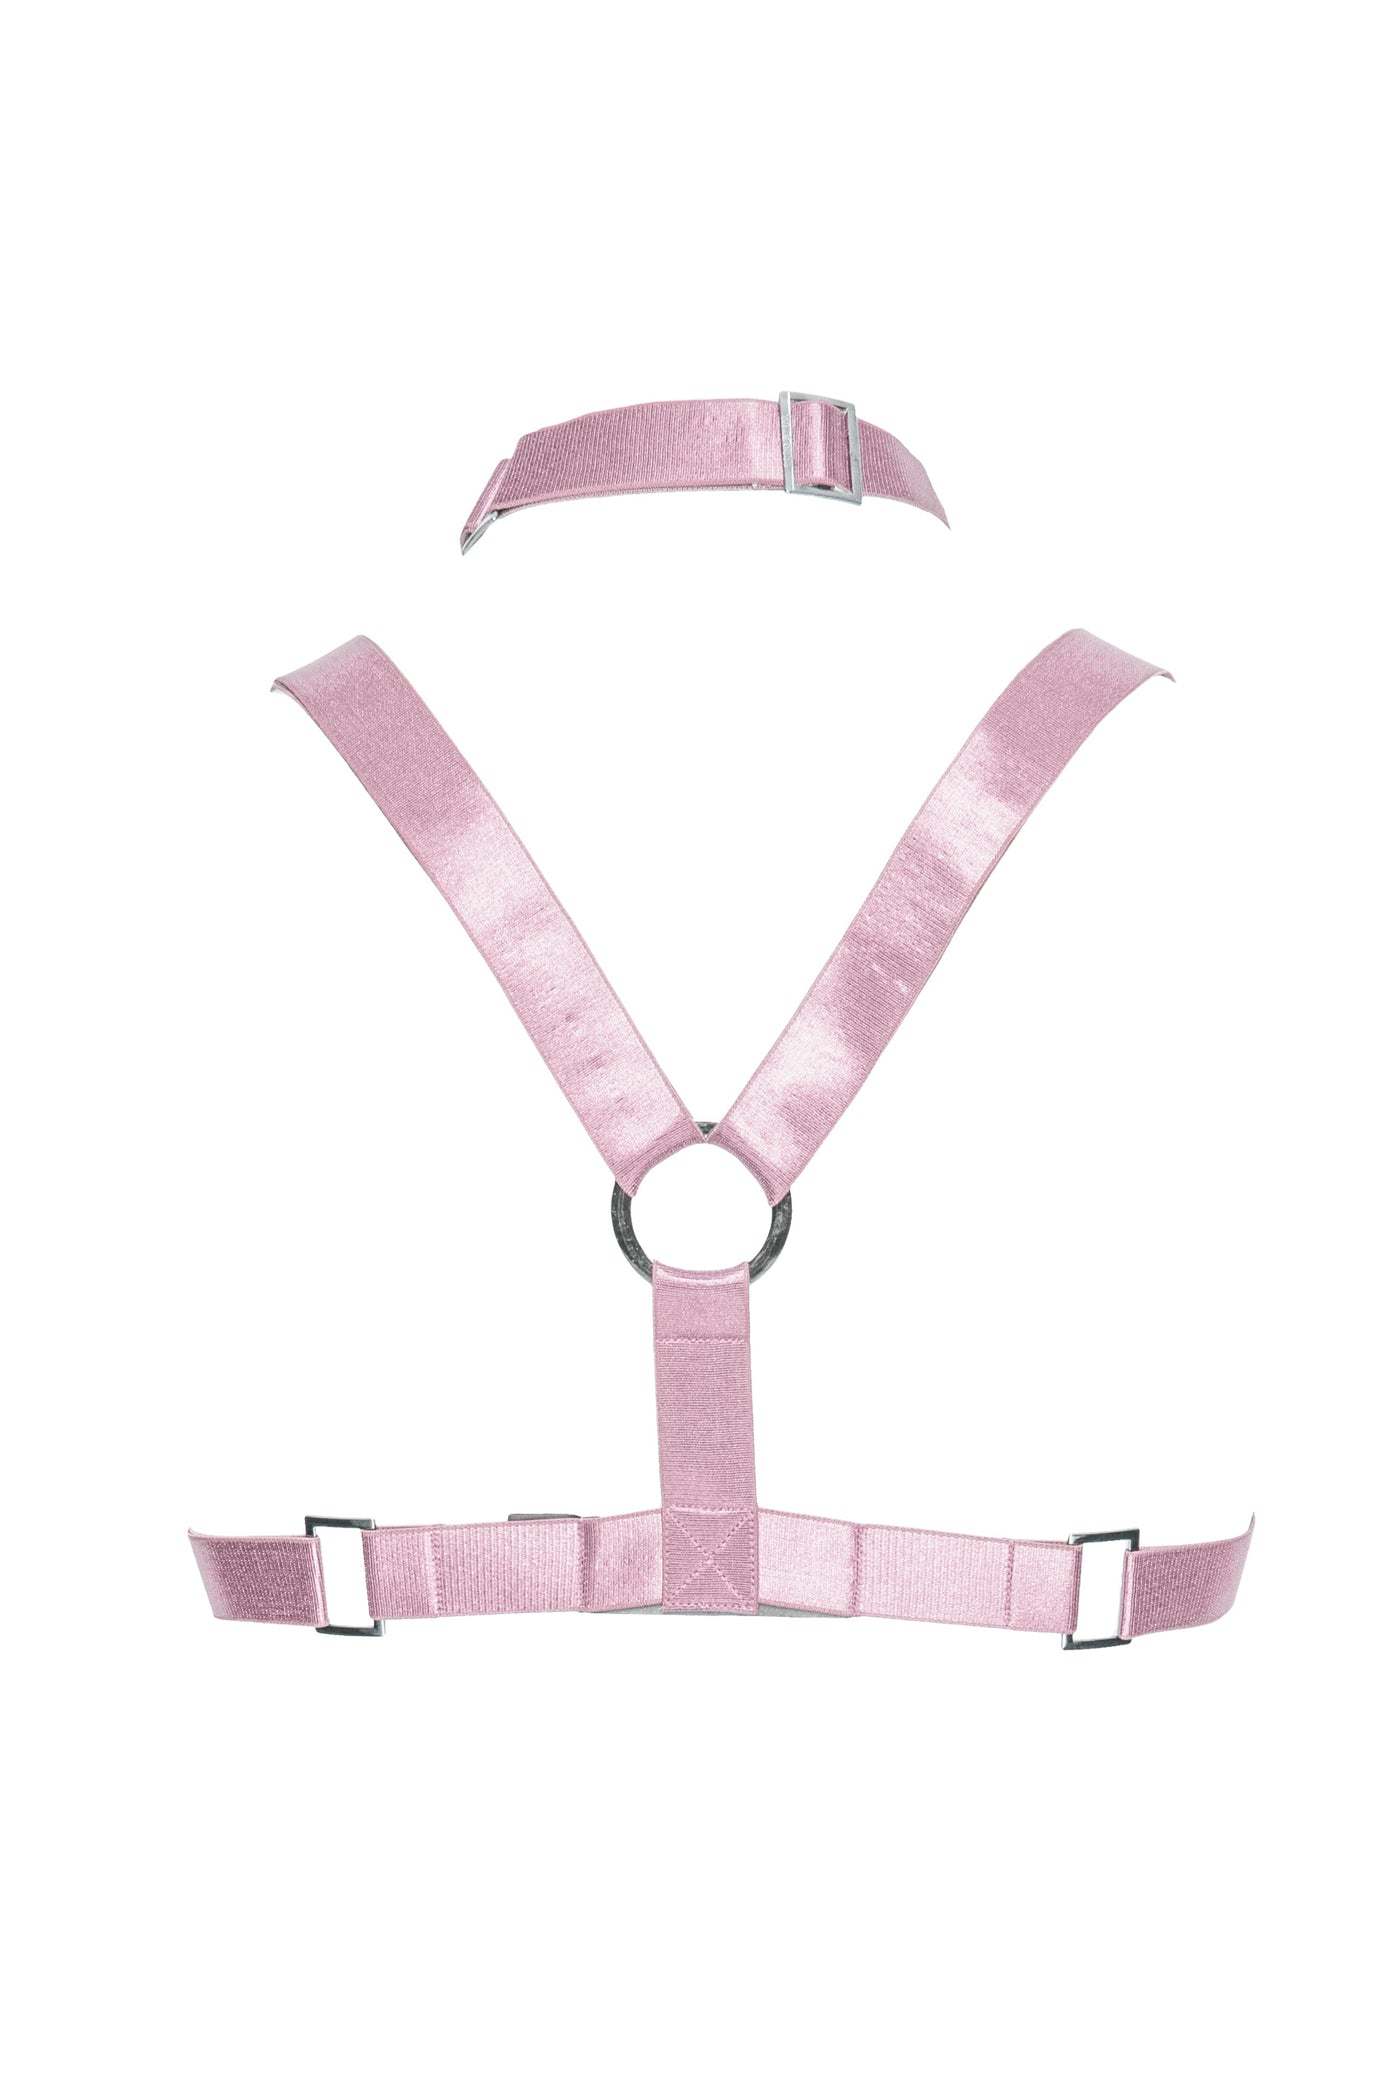 Pentagram Bust Harness (Dusted Pink)